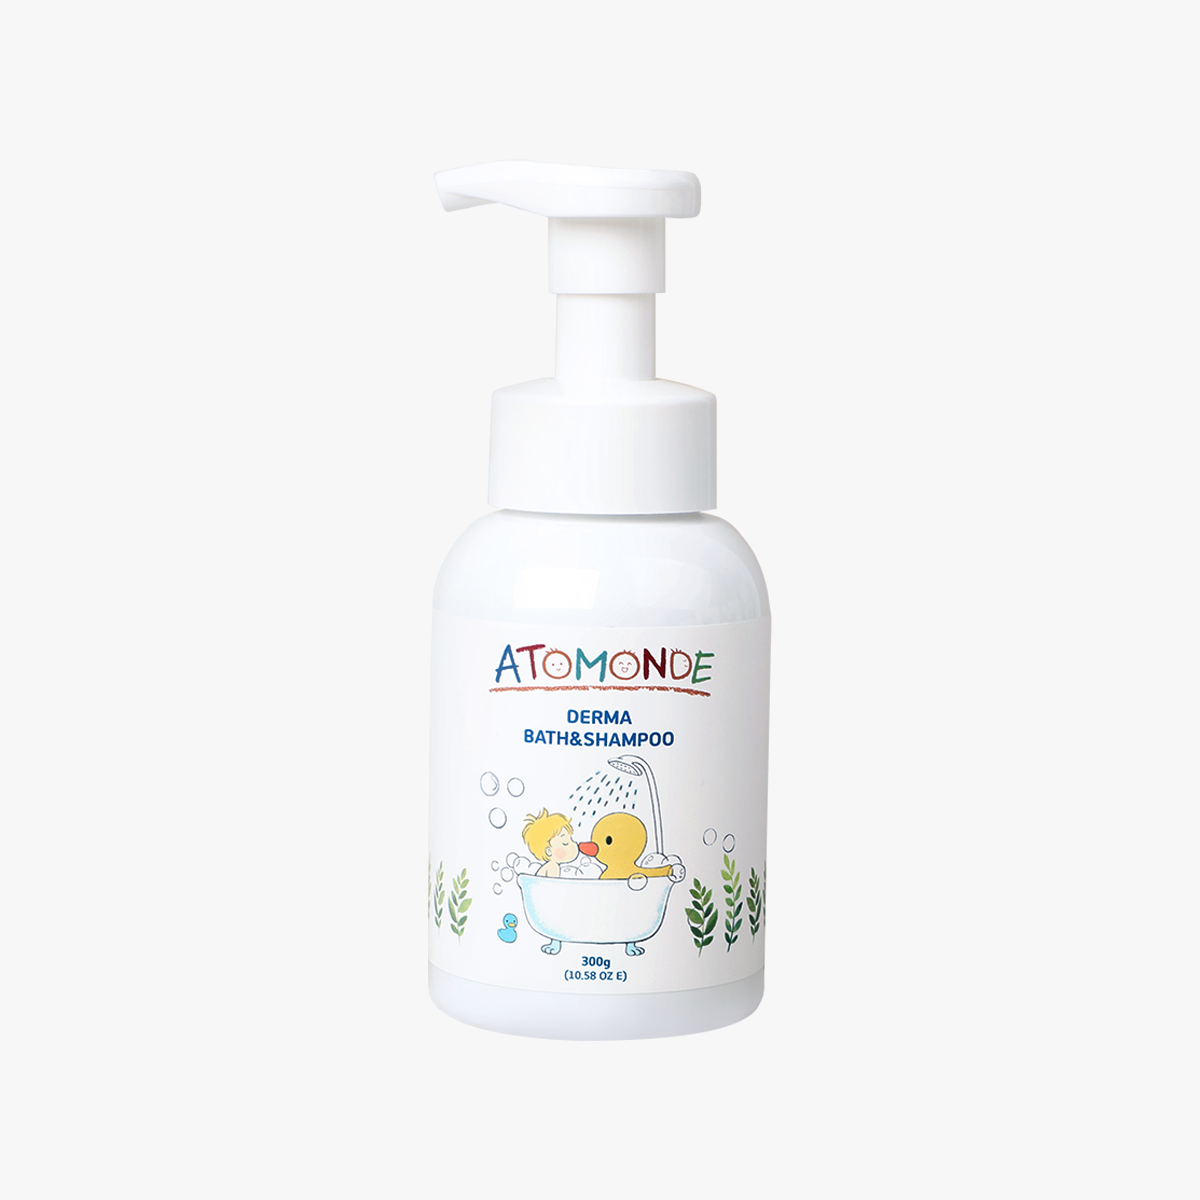 ATOMONDE Derma Bath & Shampoo 300ml